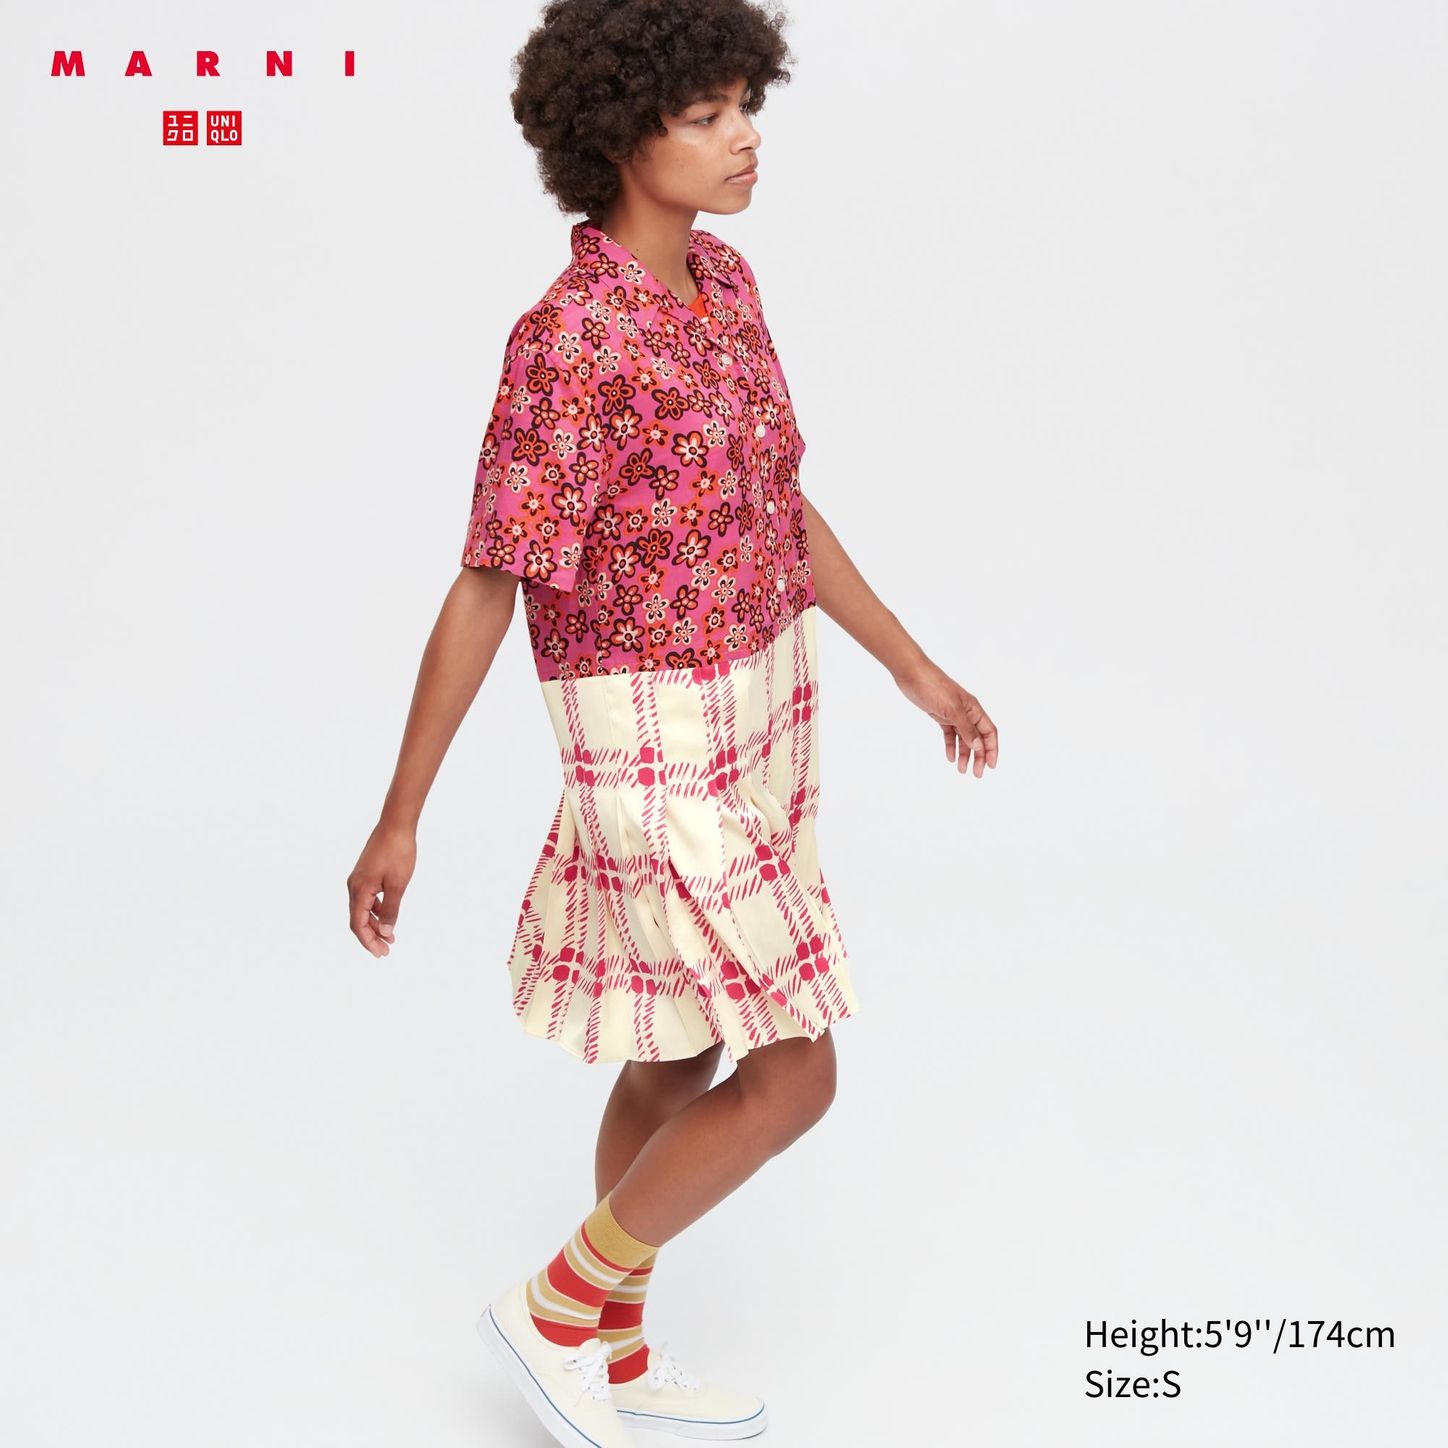 Exclusive: Uniqlo X Marni's second collaboration to hit stores